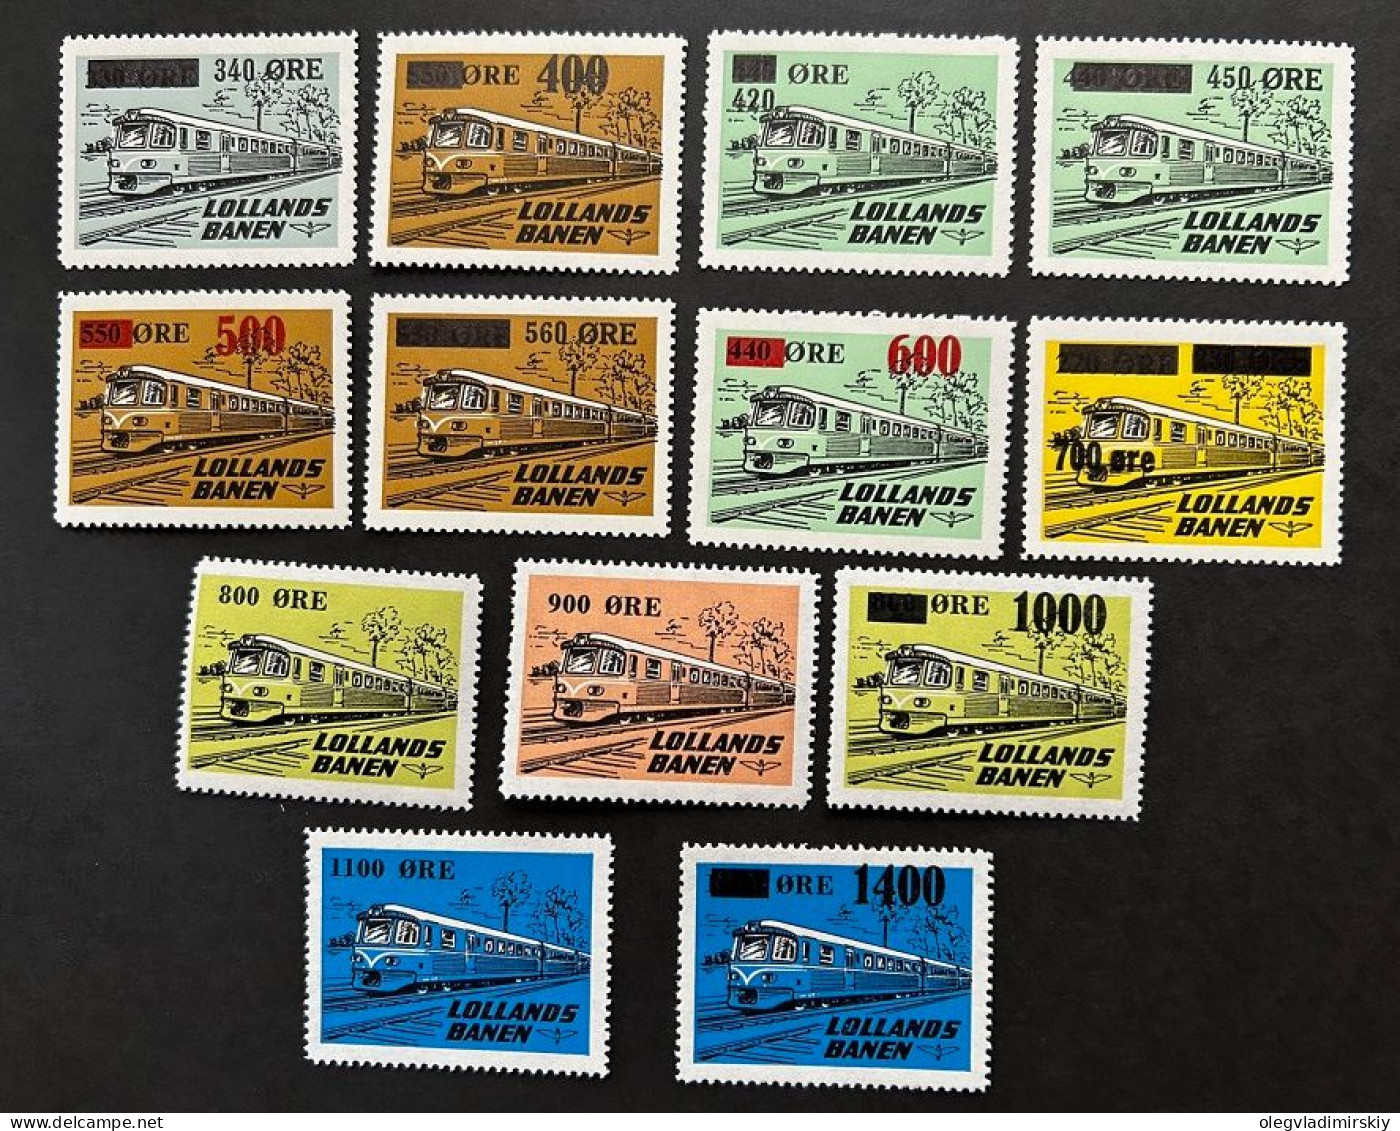 Denmark Danemark Danmark 1960 Lollandsbanen Raylway Post Train Rare Interest From 60's Set Of 13 Stamps MNH - Local Post Stamps